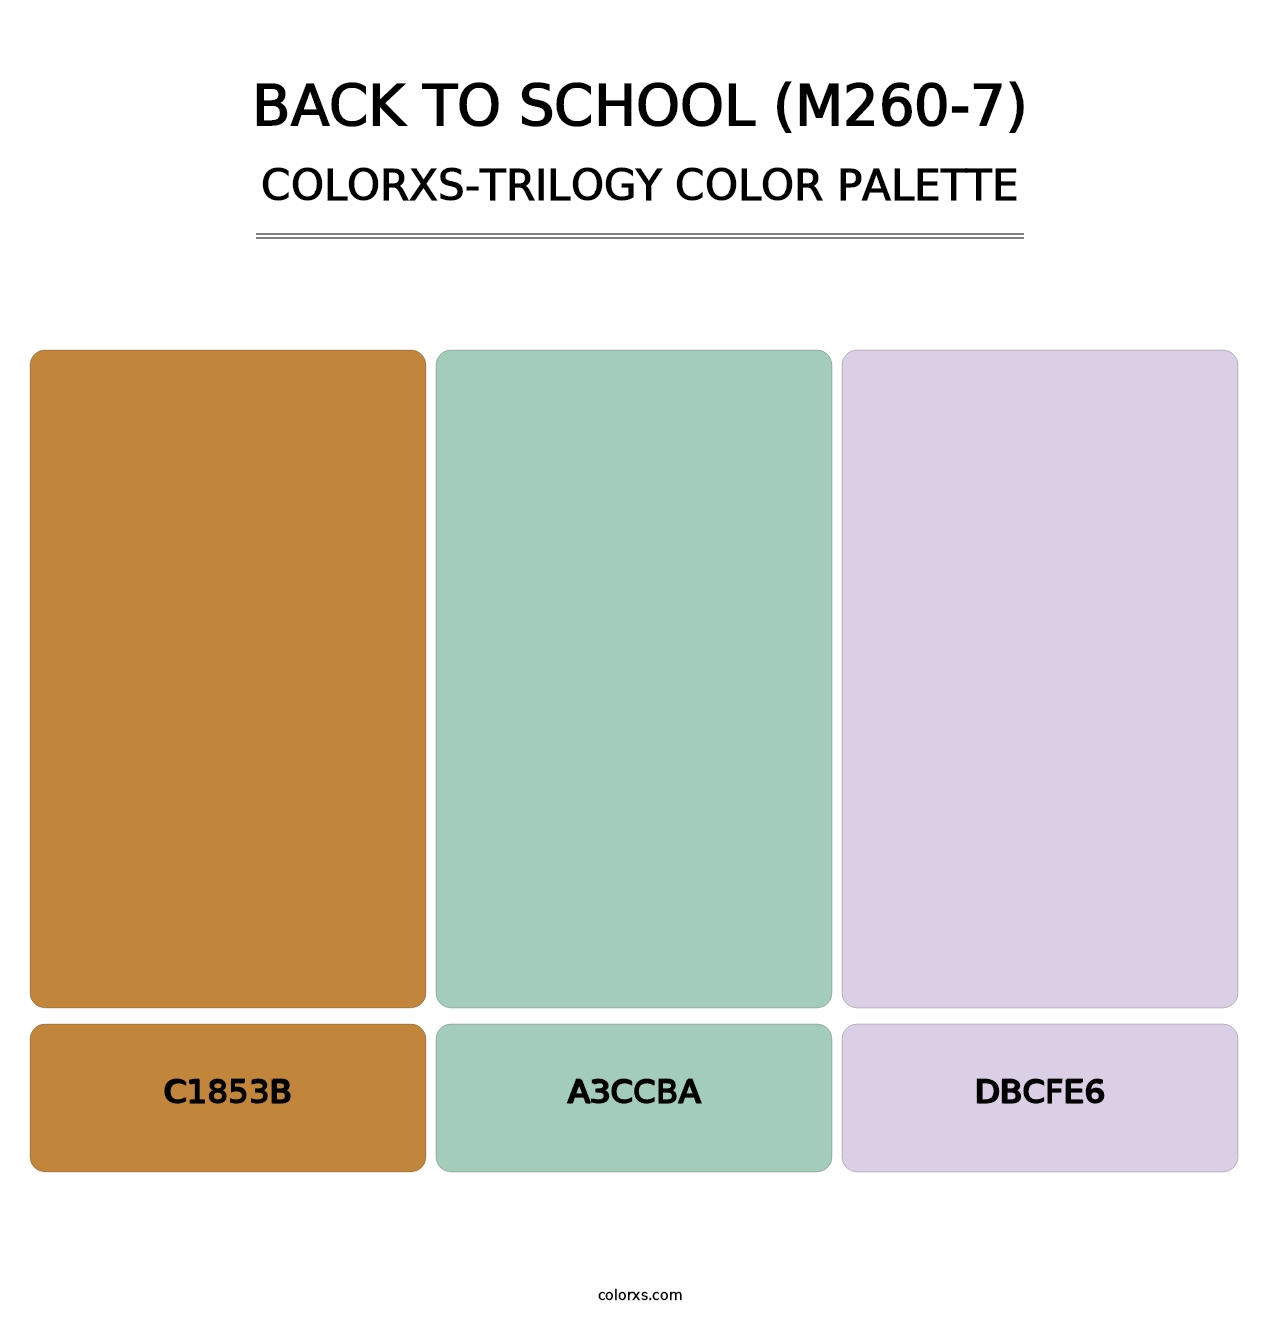 Back To School (M260-7) - Colorxs Trilogy Palette